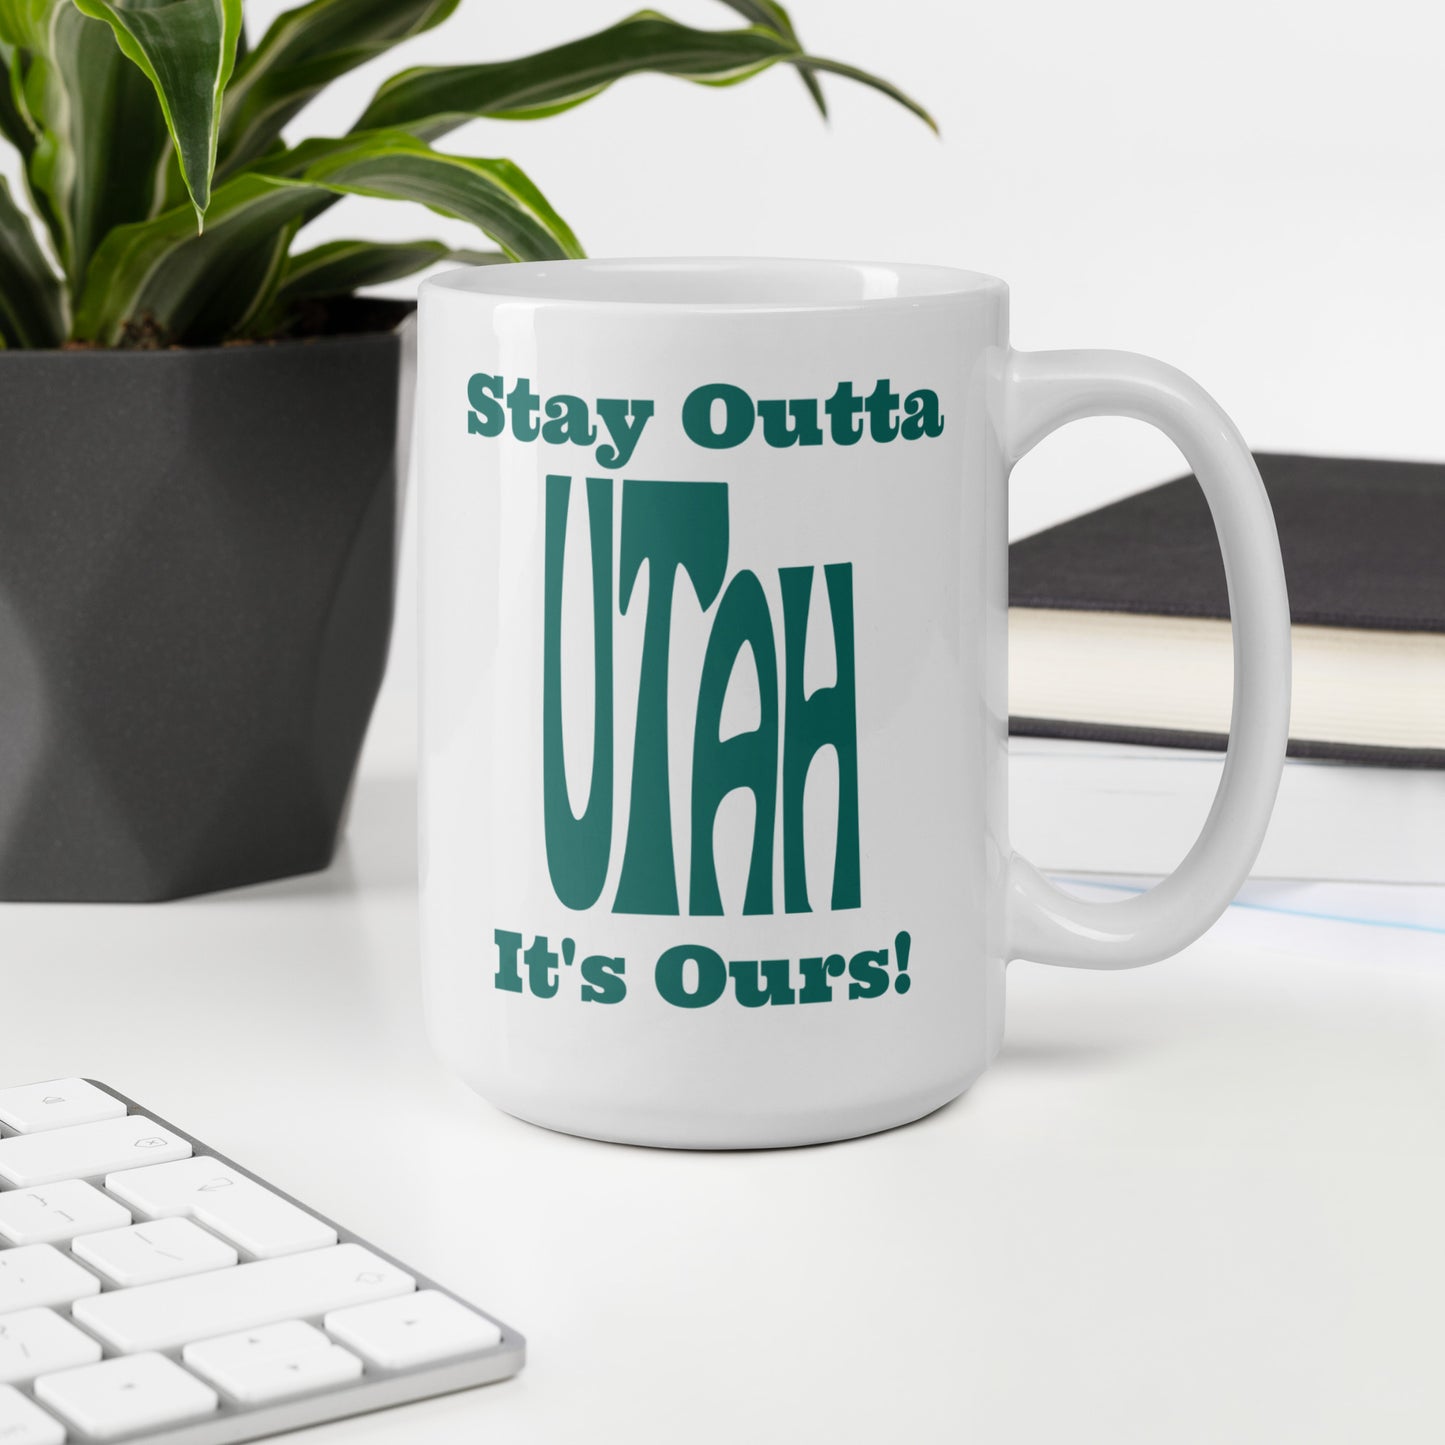 Stay Outta Utah - Dark Green Font - White Glossy Mug